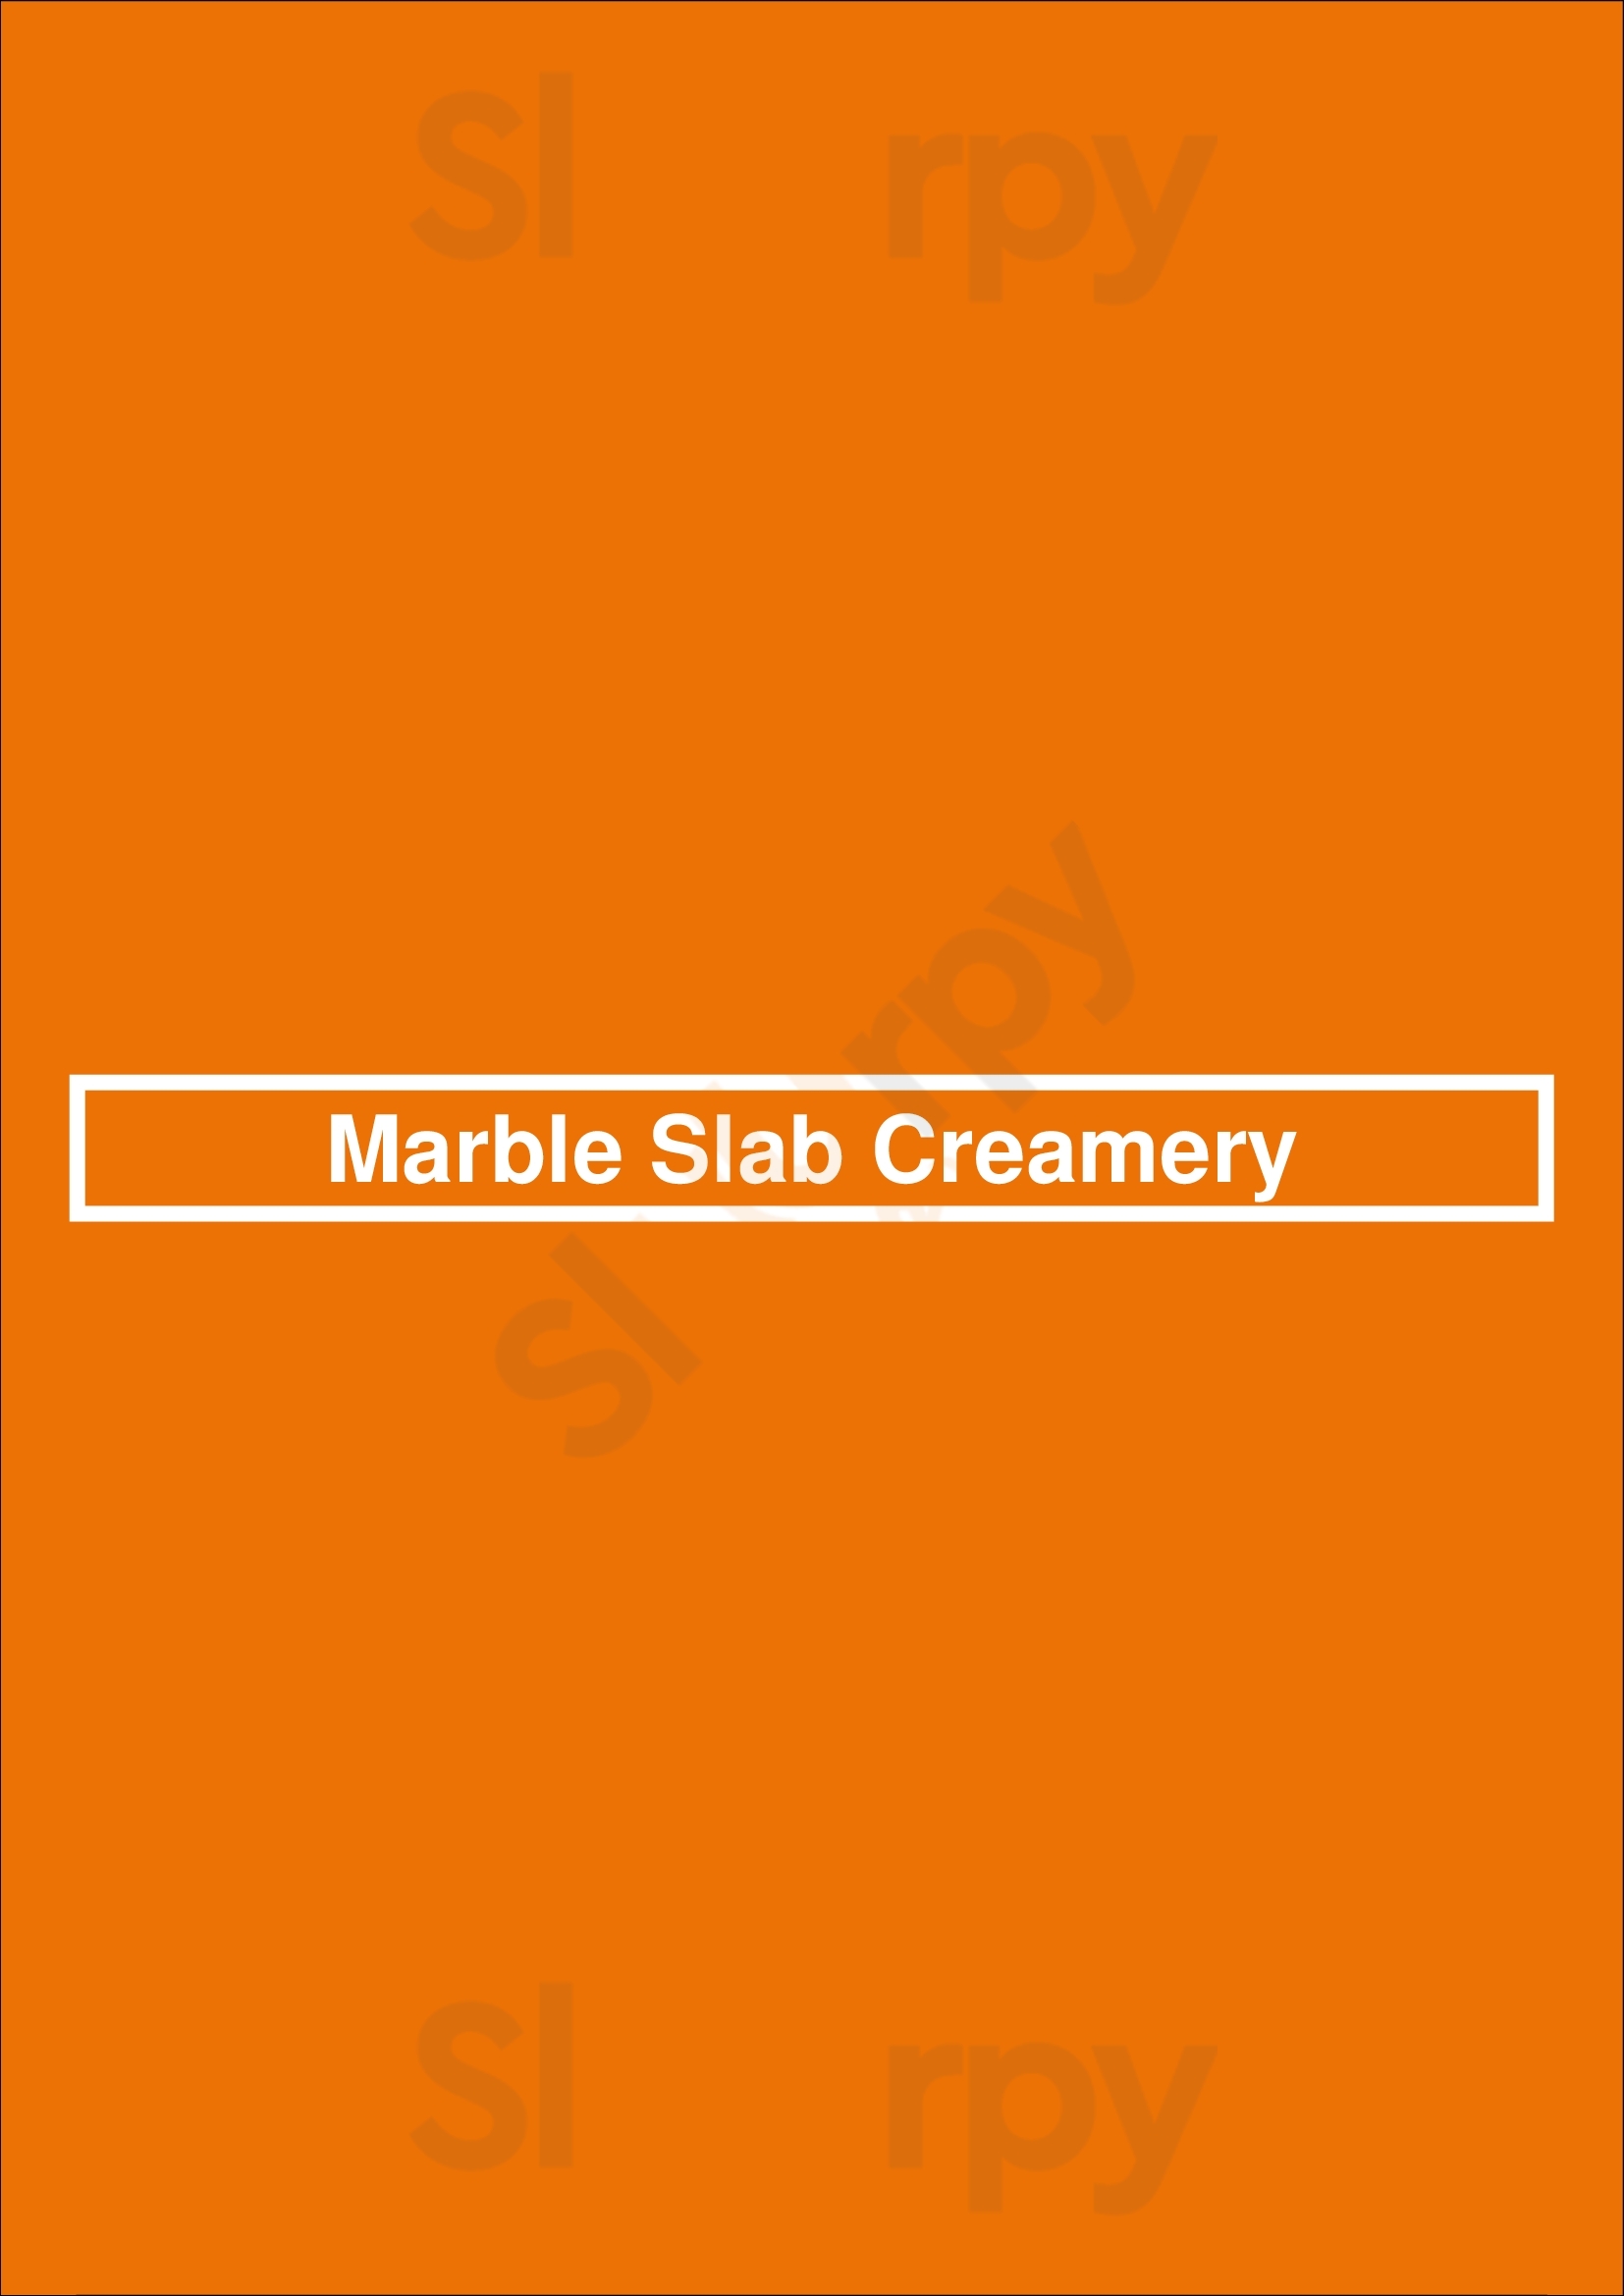 Marble Slab Creamery Halifax Menu - 1